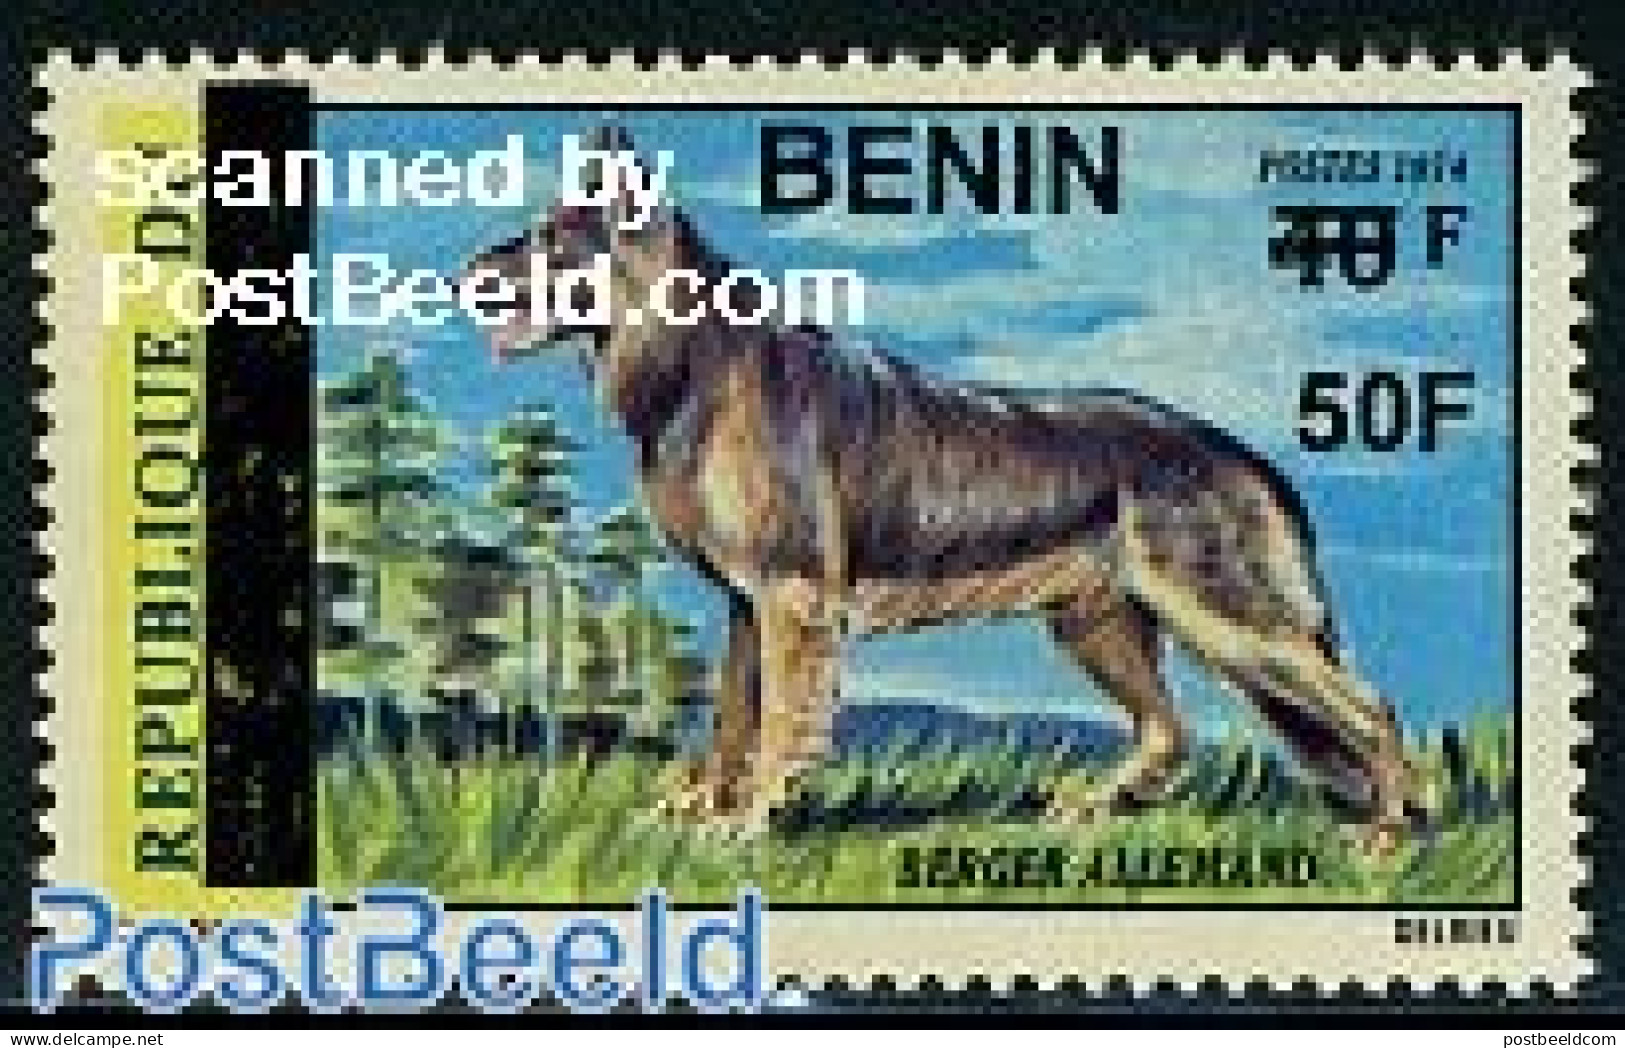 Benin 2009 Dog Overprint 1v, Mint NH, Nature - Ungebraucht